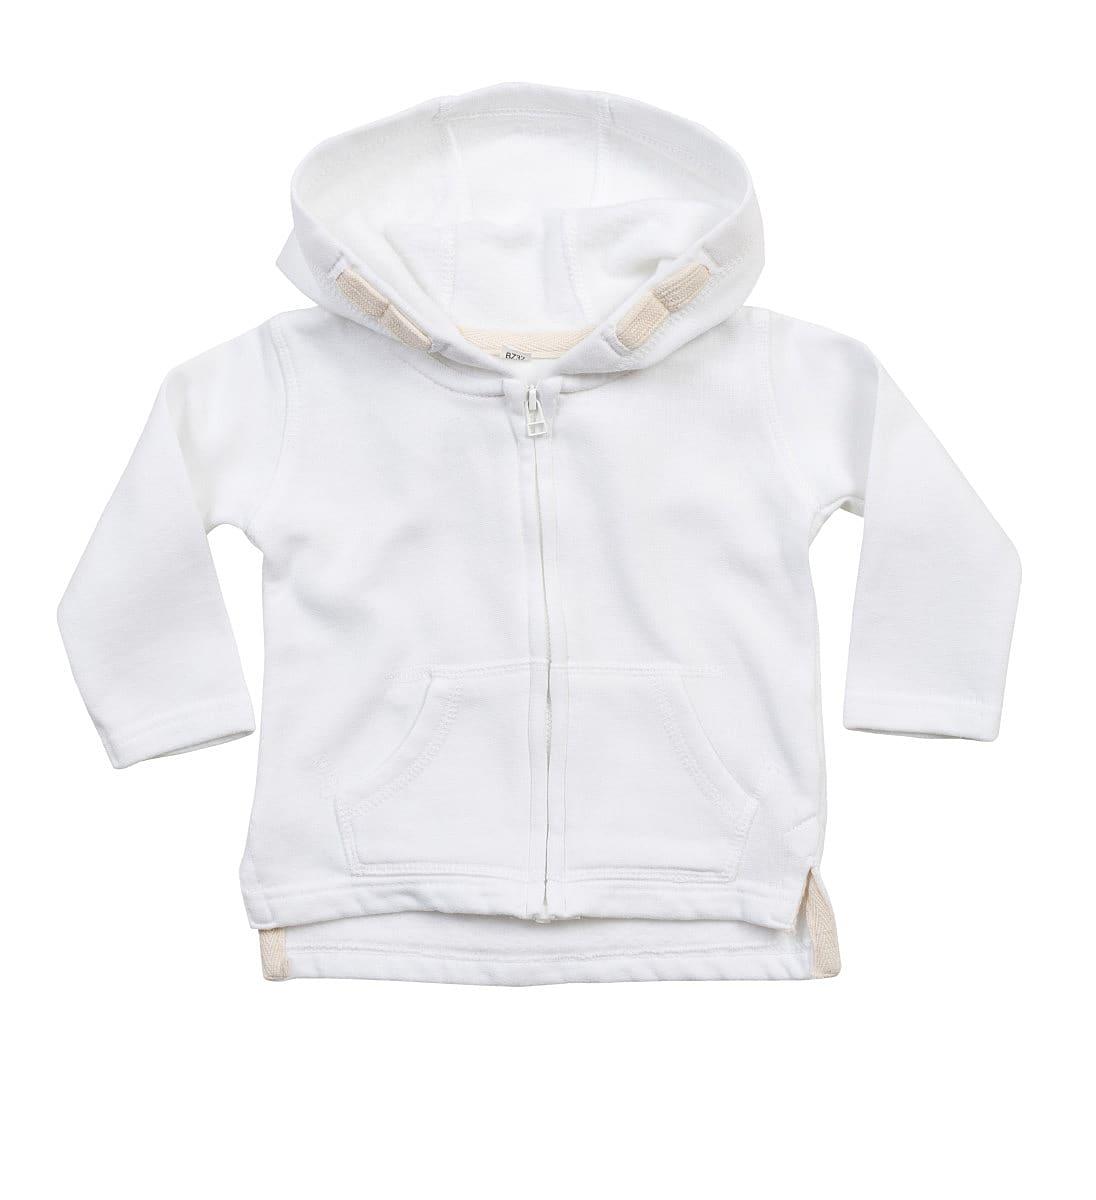 Babybugz Baby Hoodie in White (Product Code: BZ32)